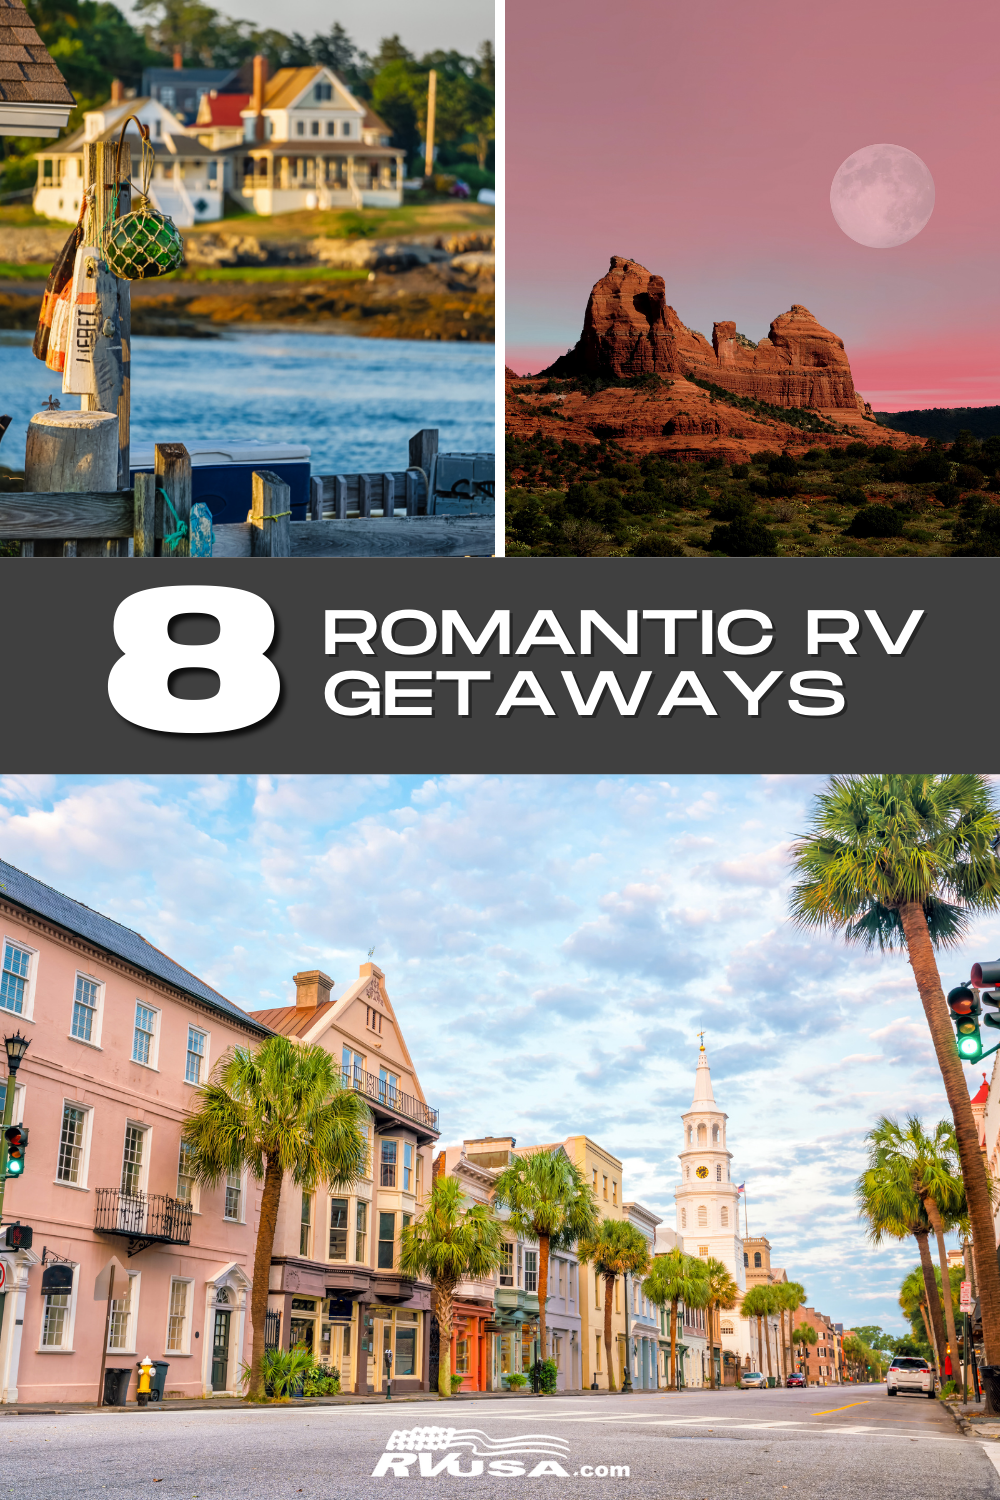 Bar Harbor, Maine + Sedona, Arizona + Charleston, South Carolina photos with text that reads "8 Romantic RV Getaways"